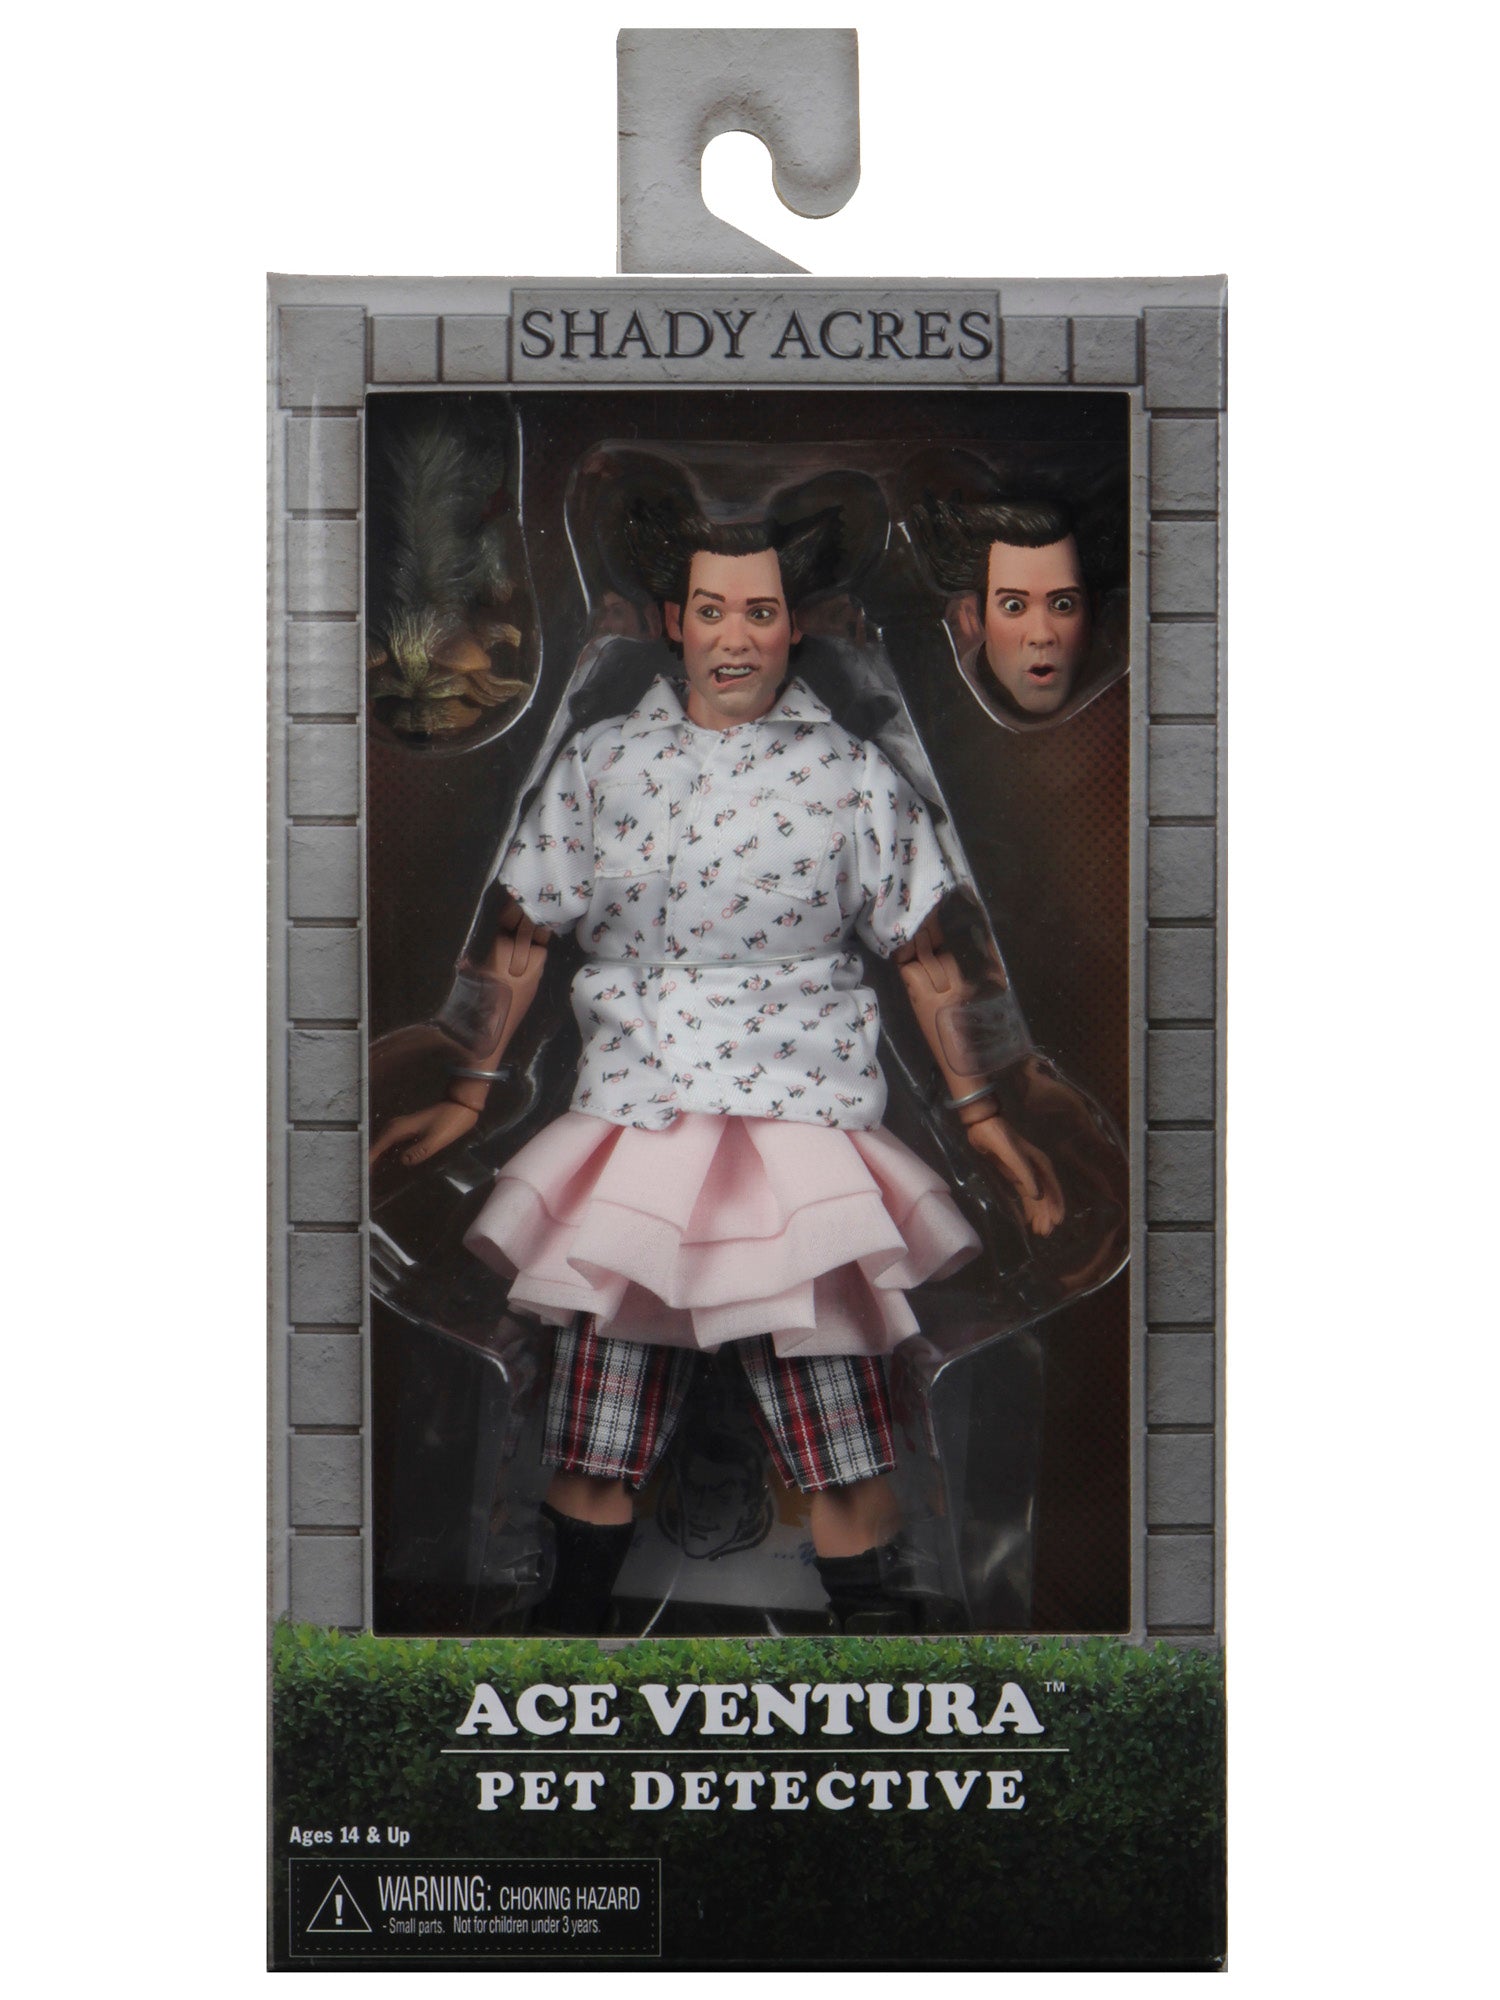 NECA - Ace Ventura: Pet Detective - 8" Clothed Action Figure - Ace Ventura (Shady Acres) - costumes.com